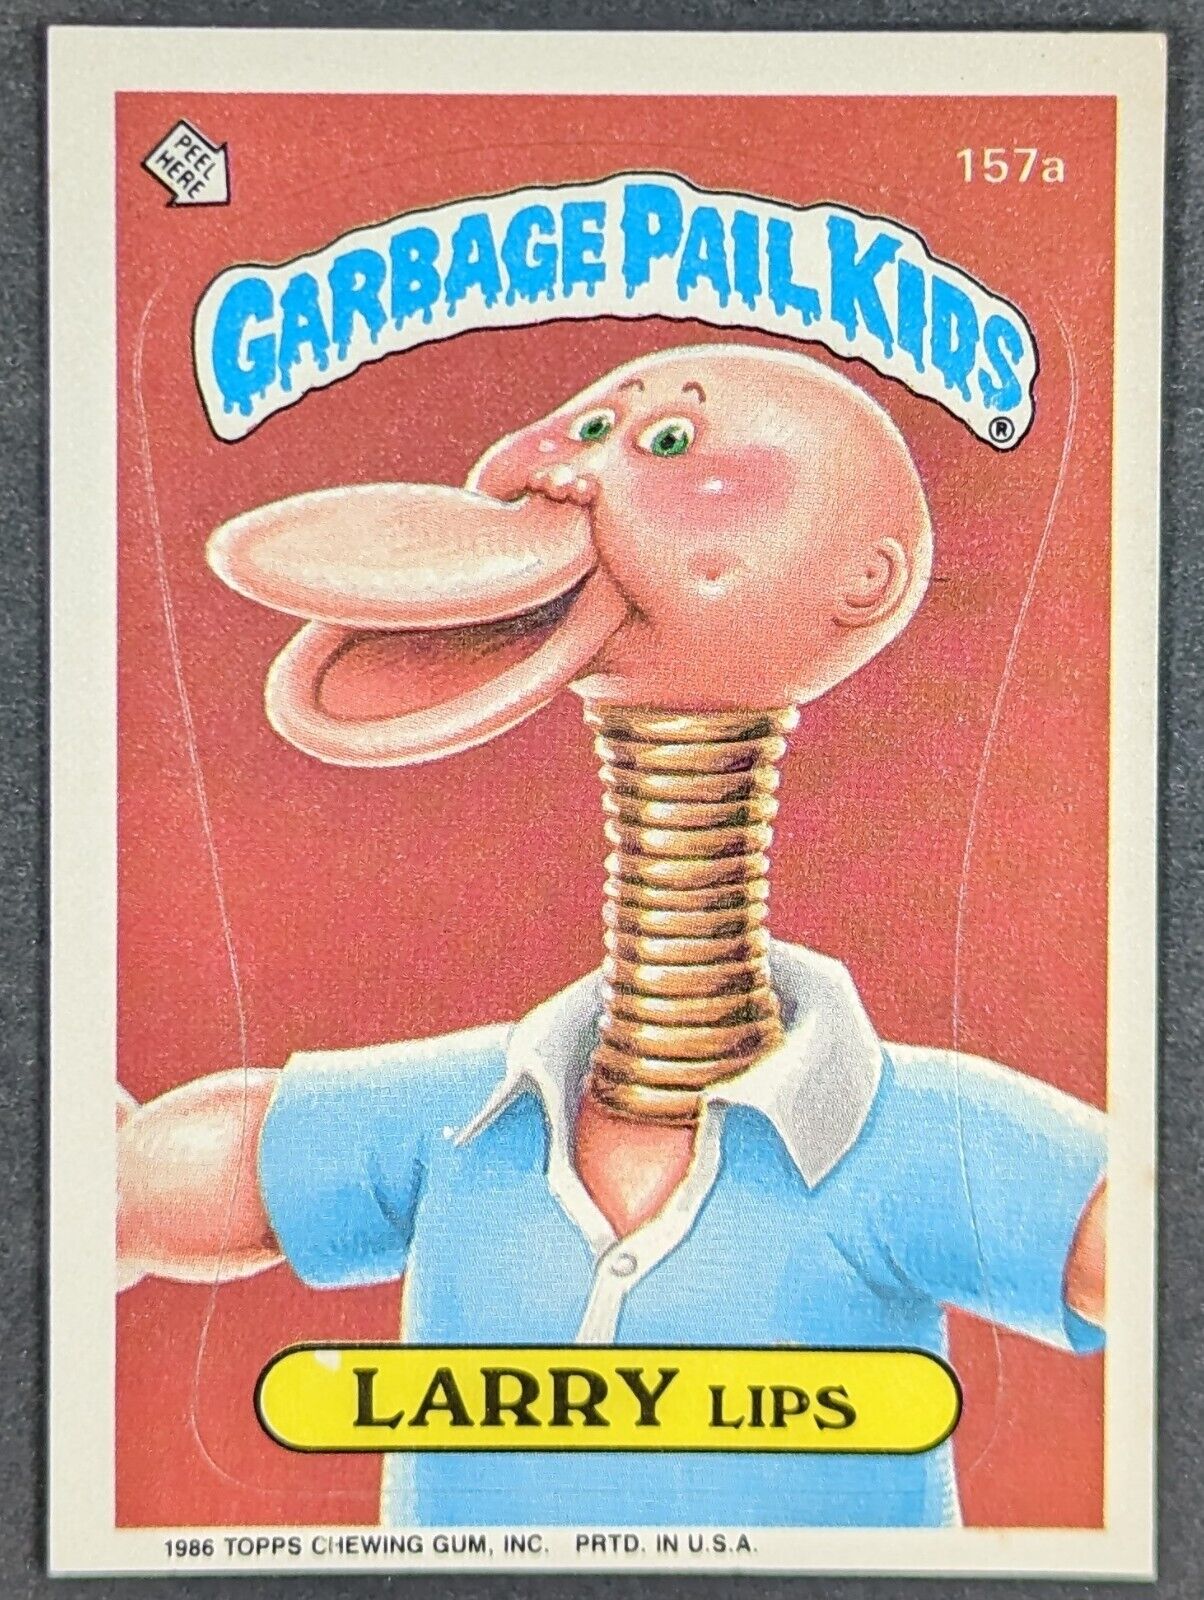 Vintage 1986 Larry Lips Garbage Pail Kids Topps Sticker Card #157a (NM)